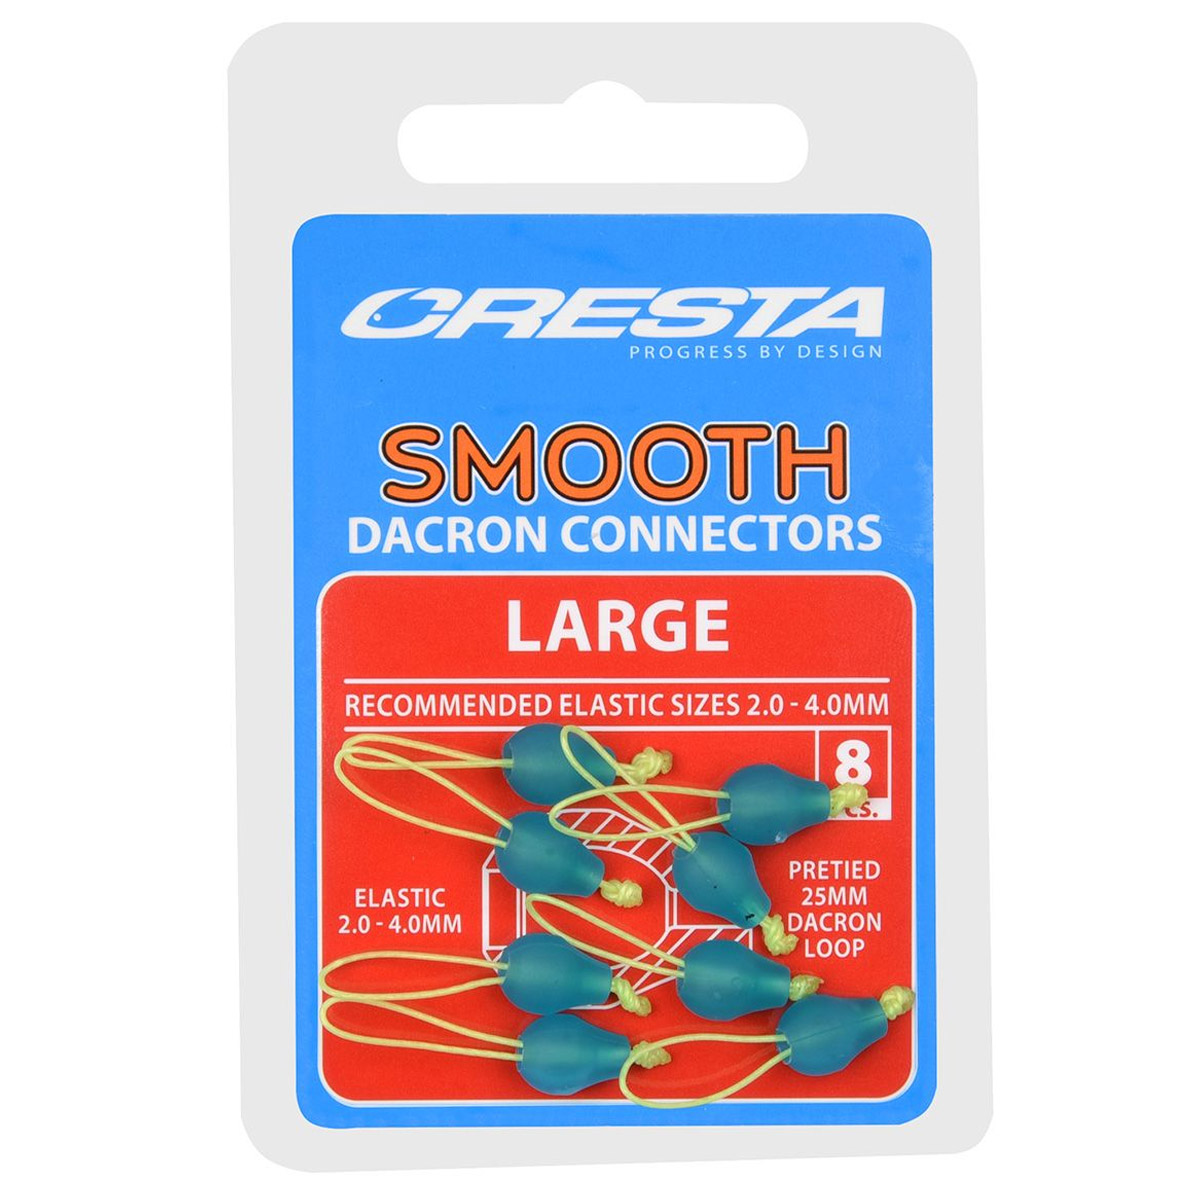 Cresta Smooth Dacron Connectors -  large